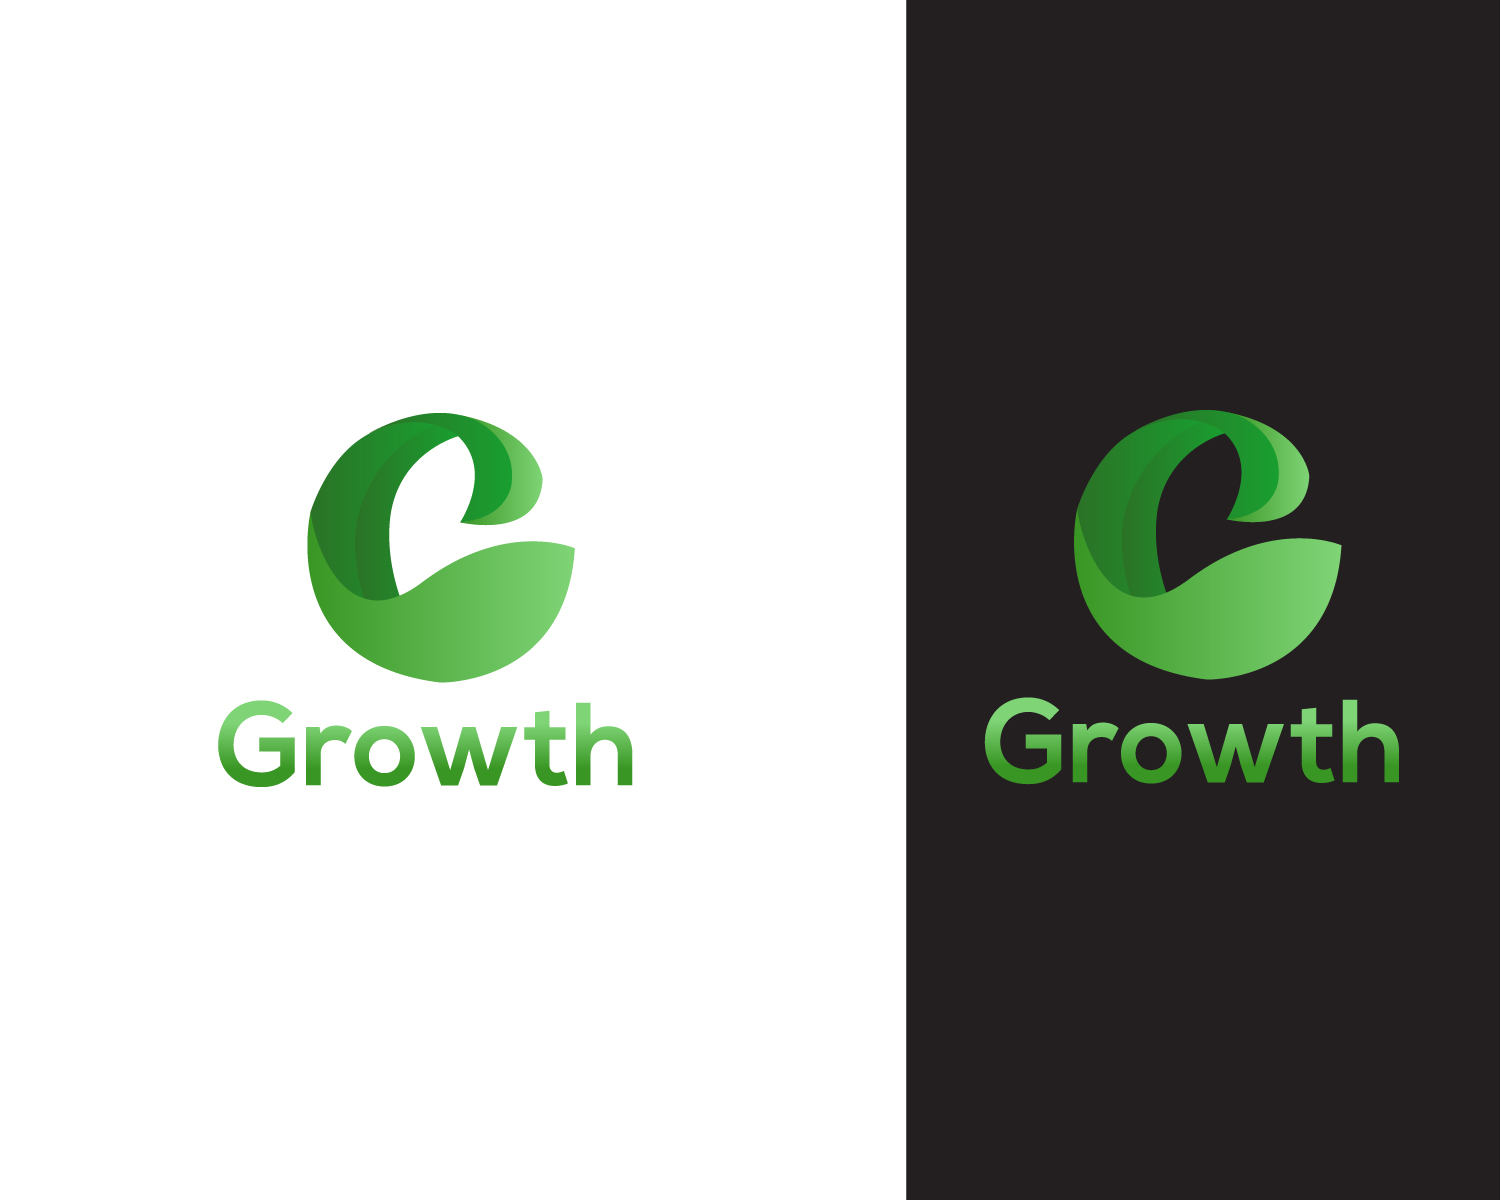 Business Logo Design - To Strengthen Your Visual Branding